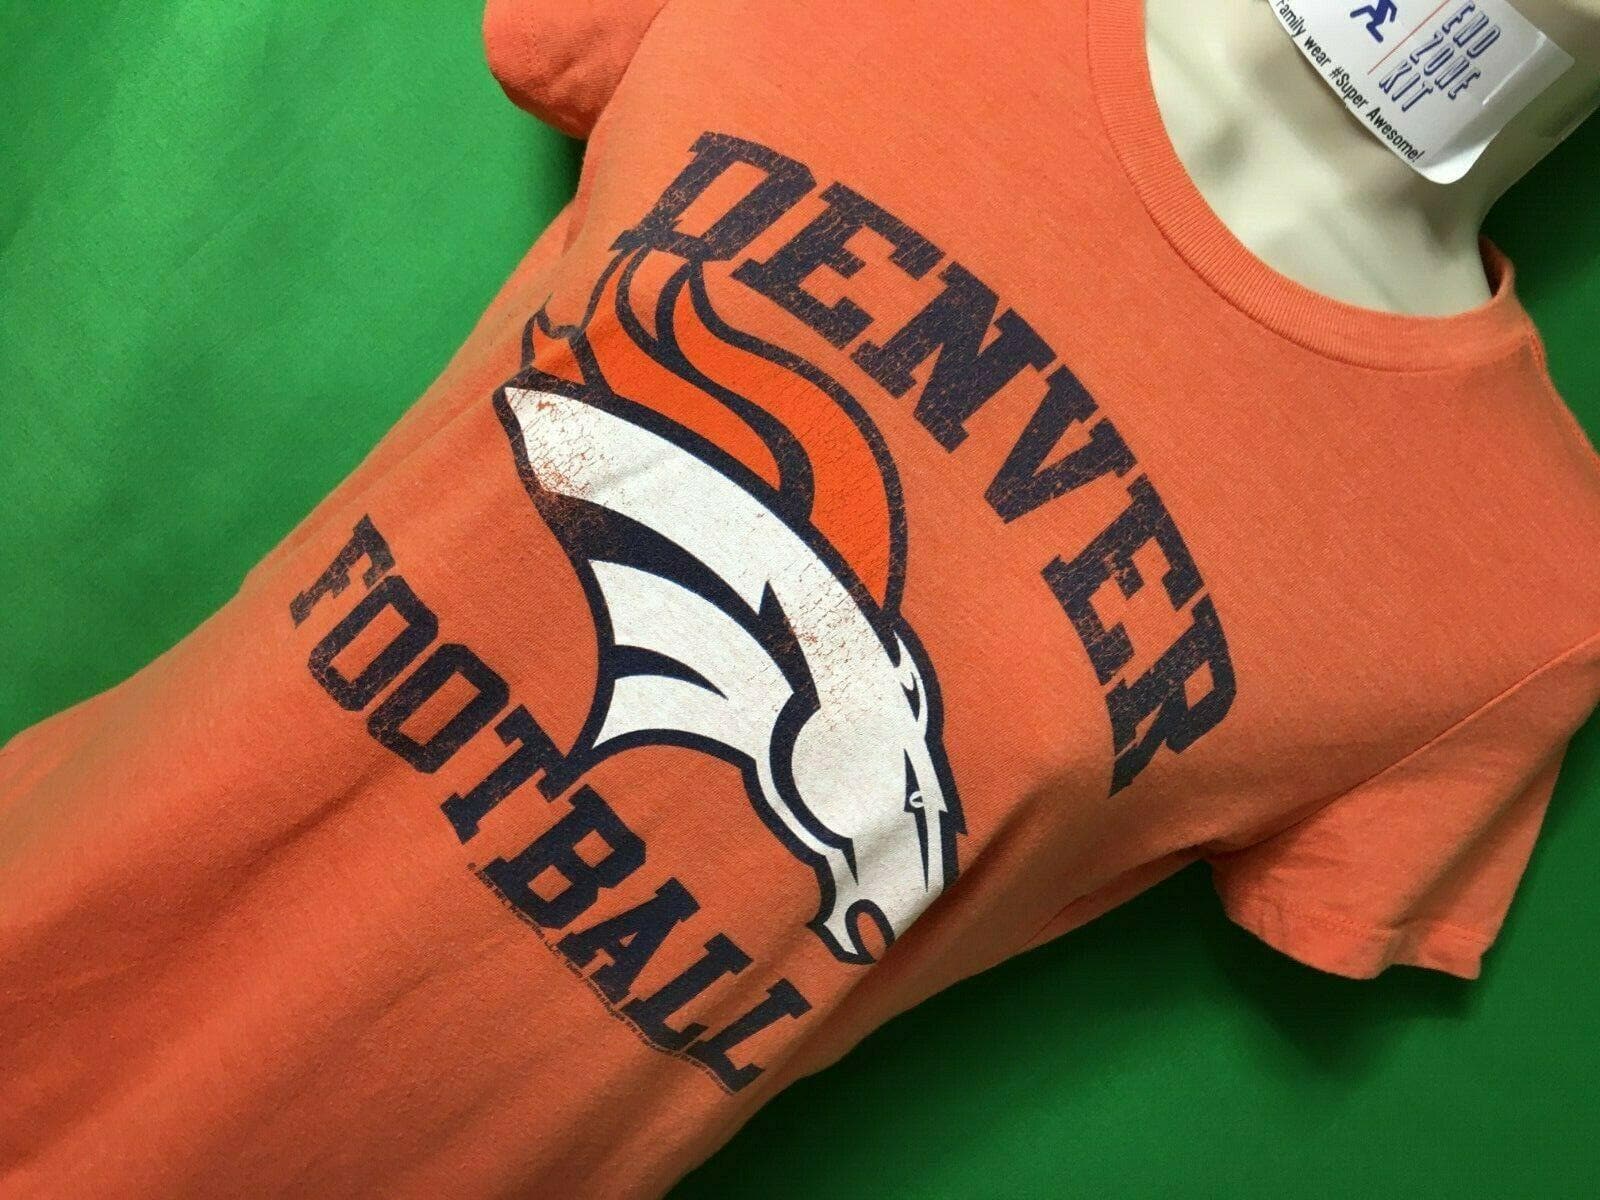 NFL Denver Broncos Old Navy T-Shirt Women's X-Small